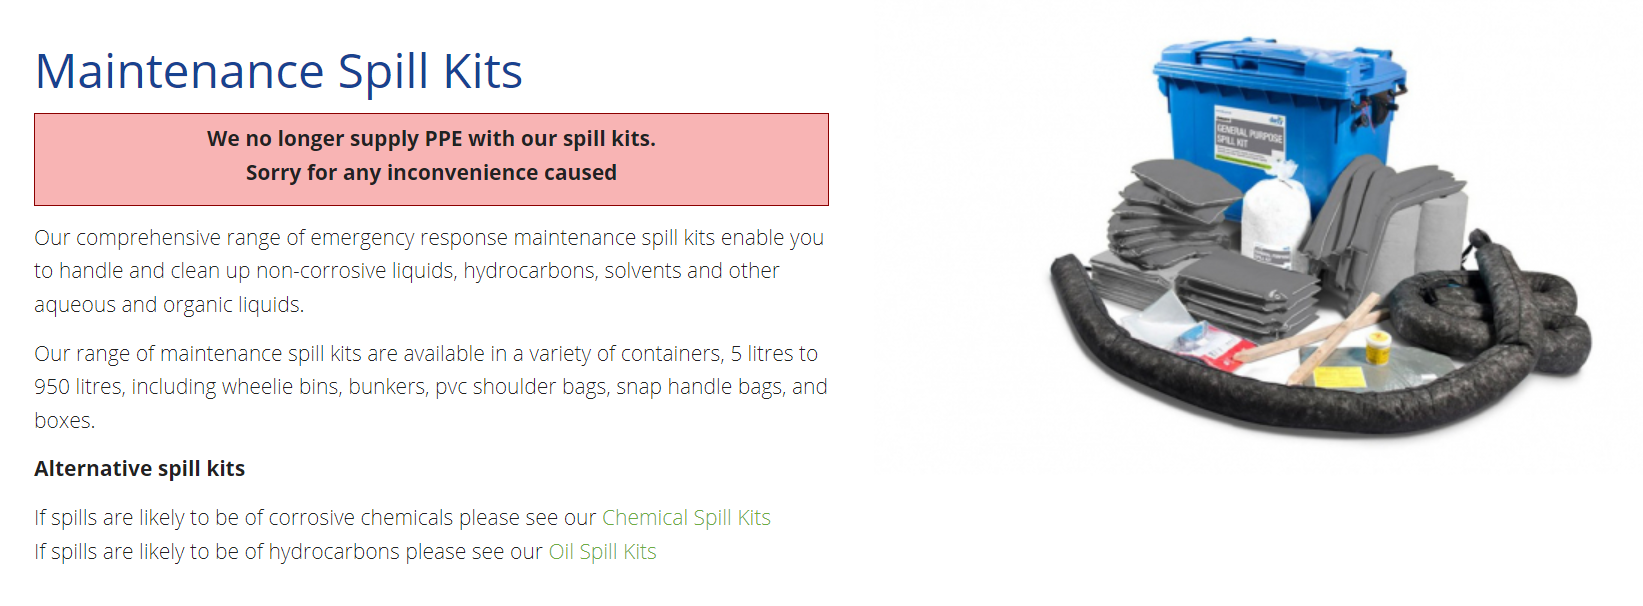 Maintenance spill kit